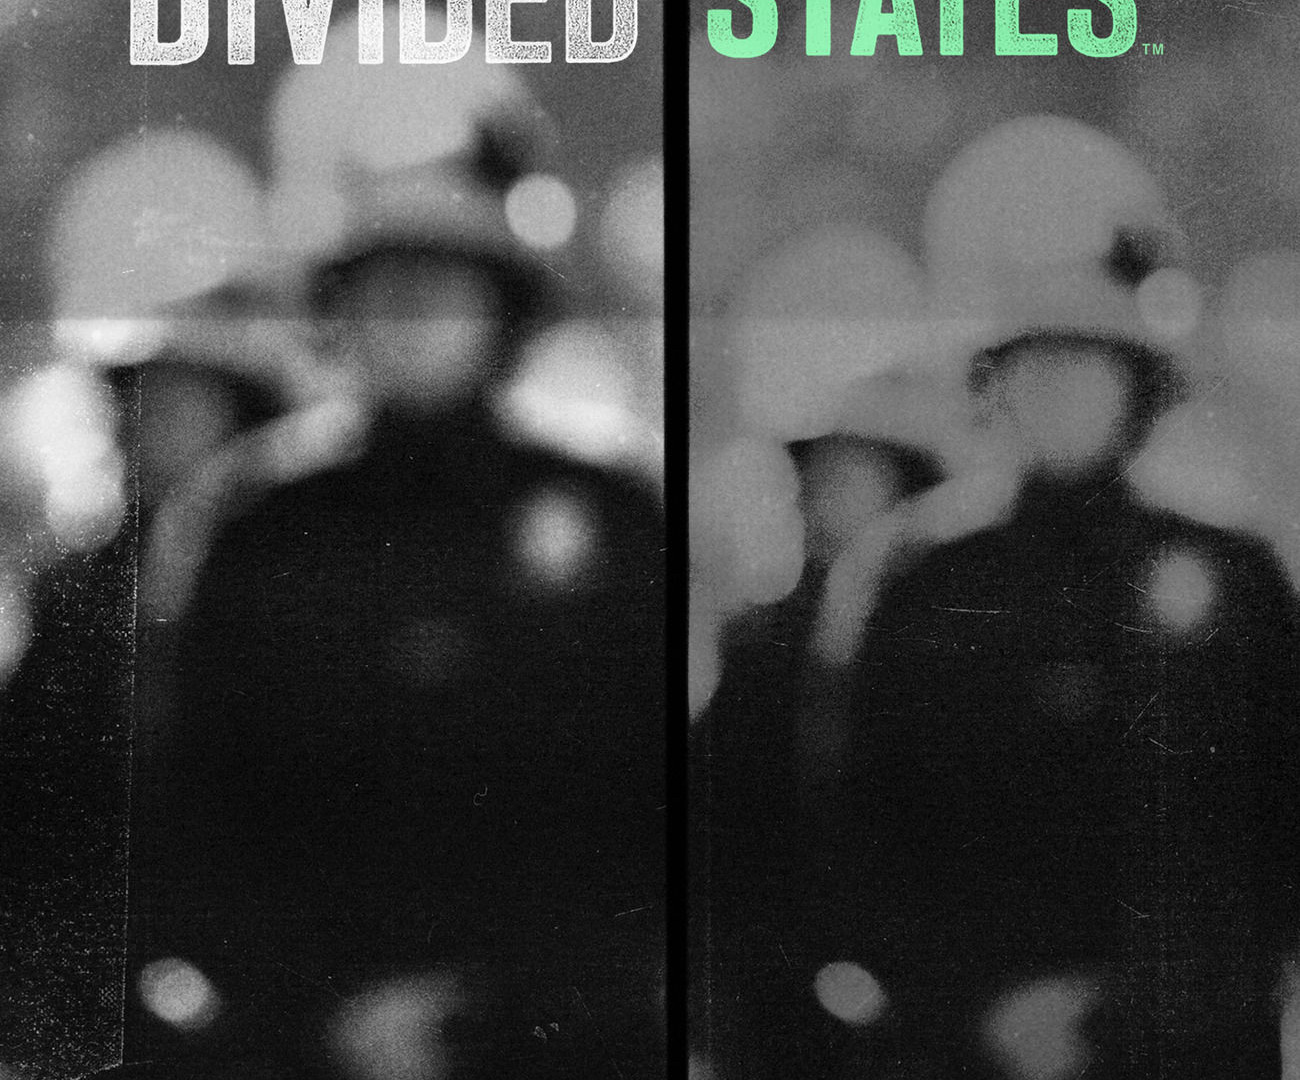 Сериал Divided States